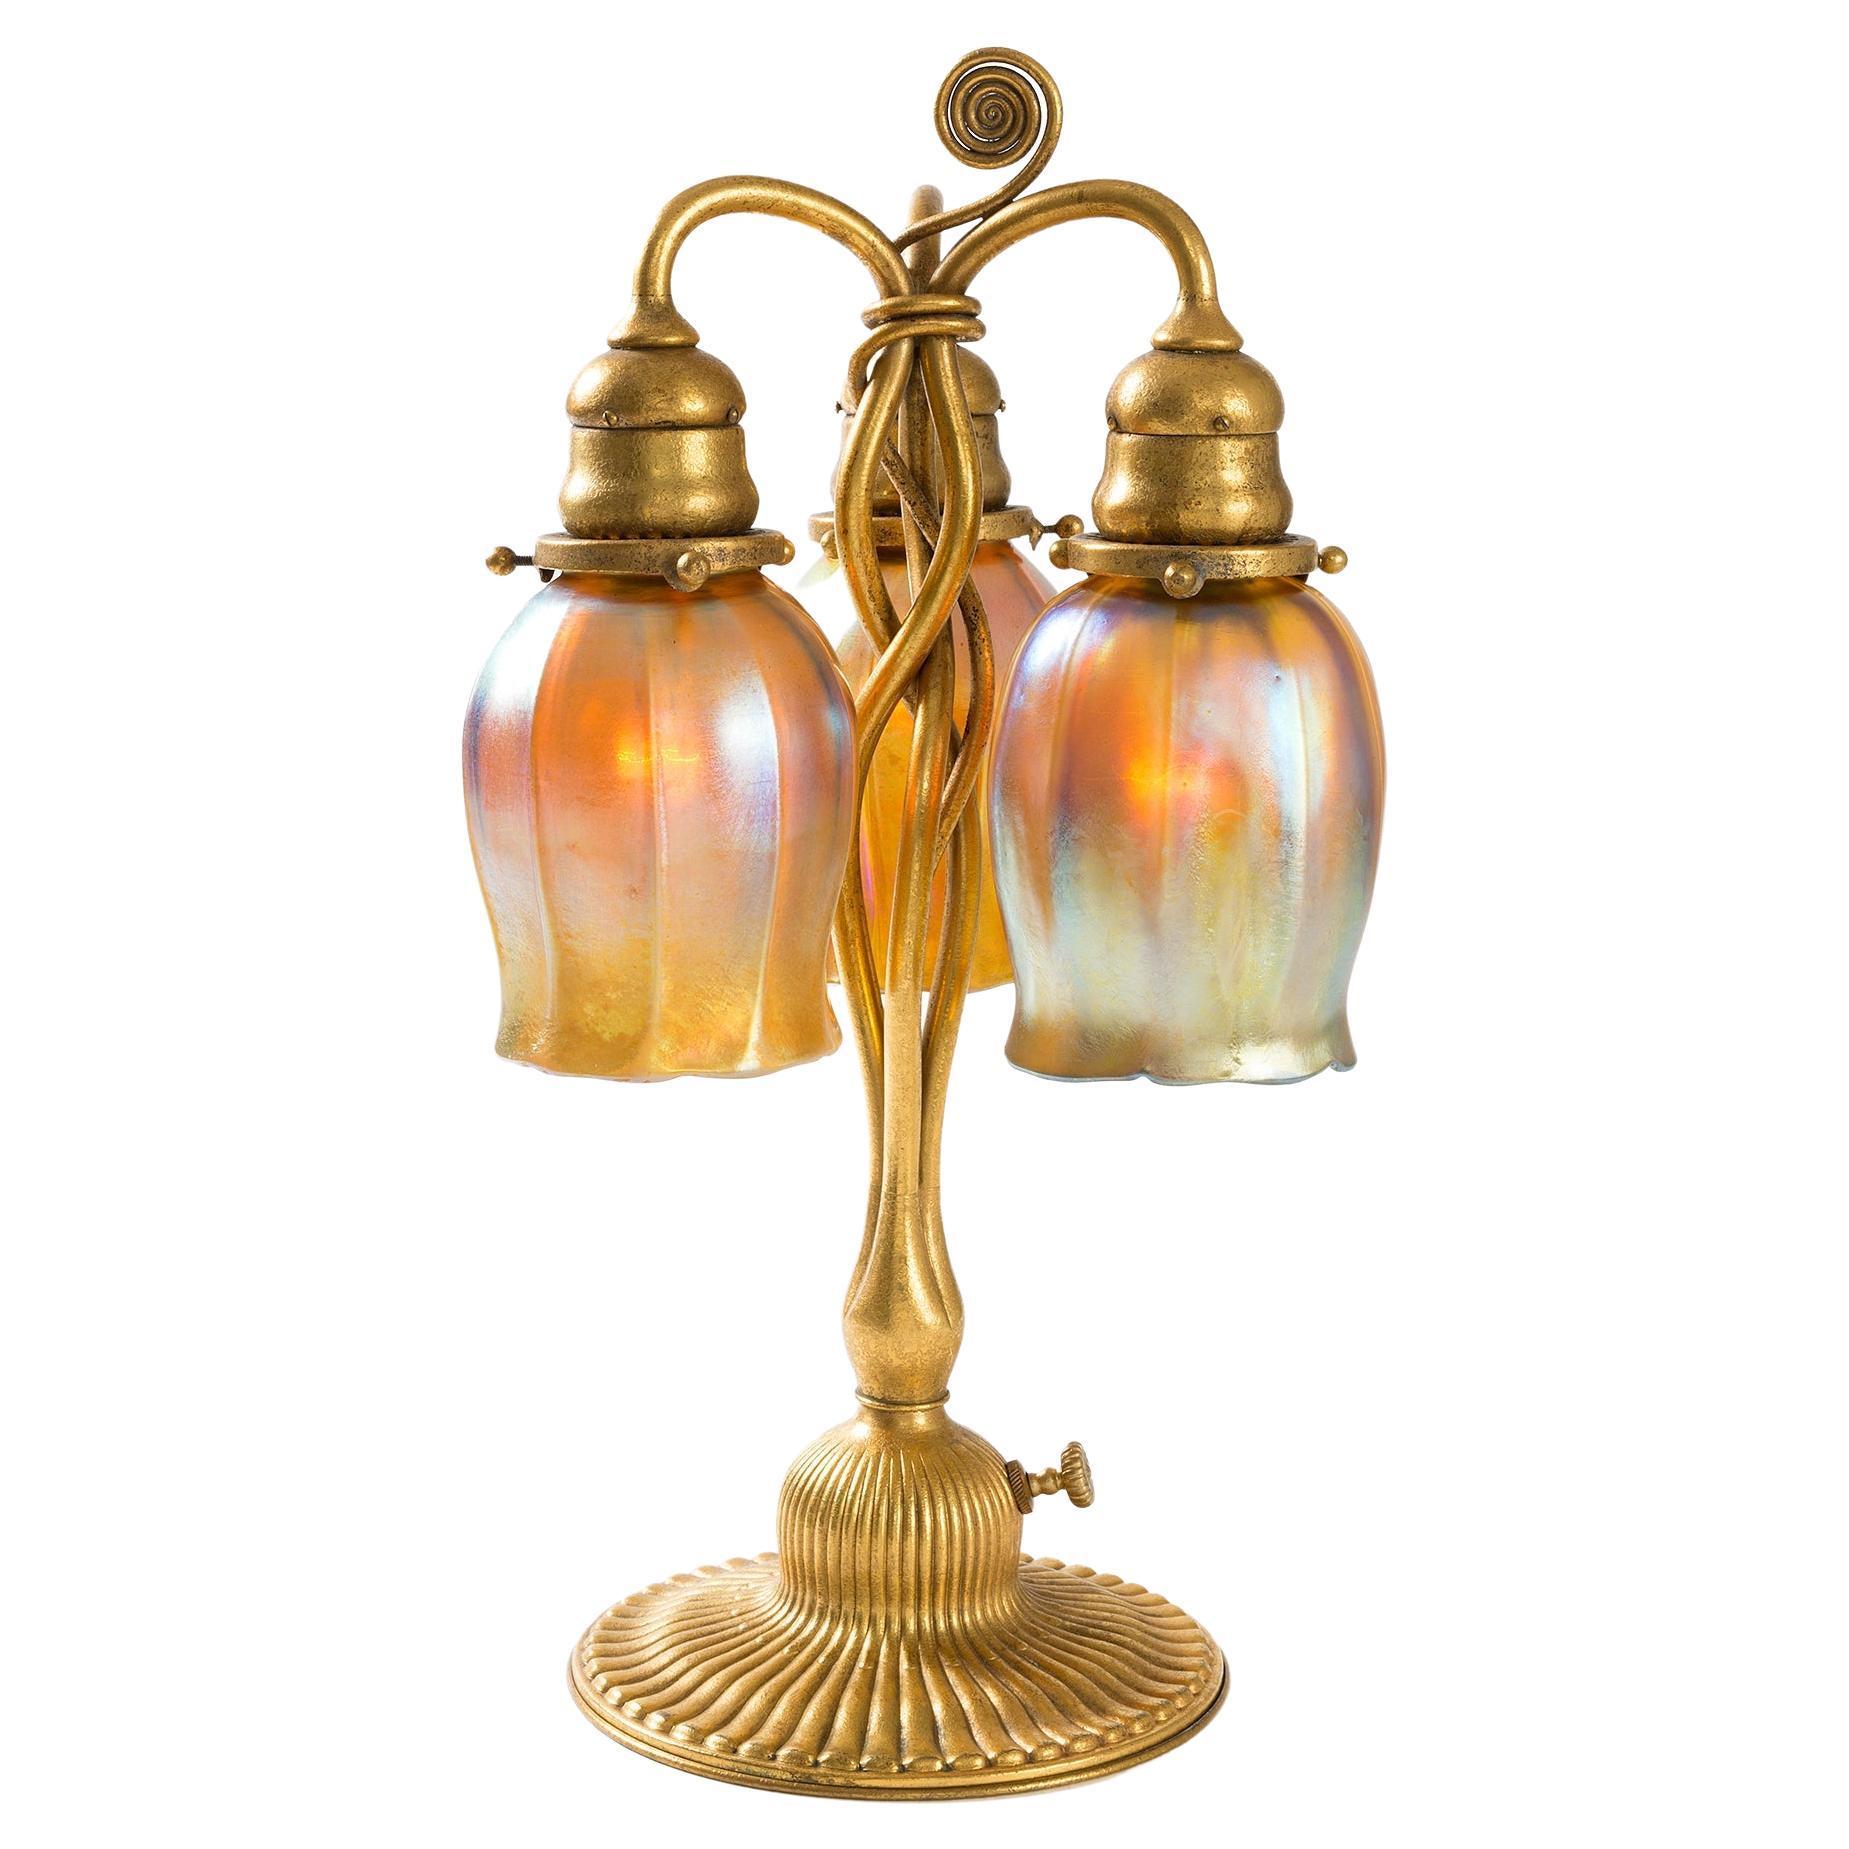 Tiffany Studios New York "Newell Post" Favrile Glass Desk Lamp